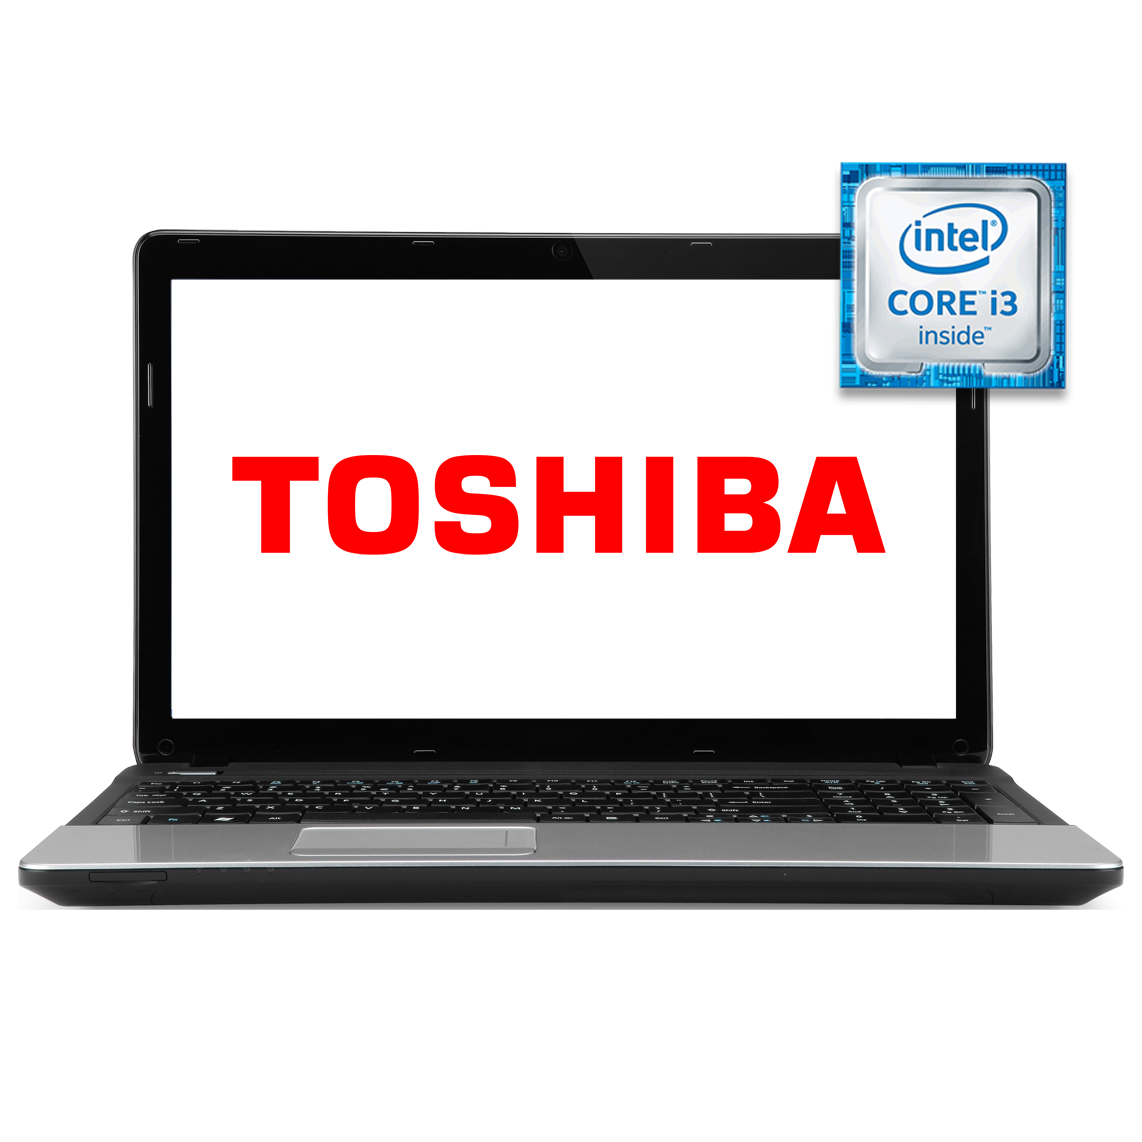 Toshiba - 15.6 inch Core i3 2nd Gen